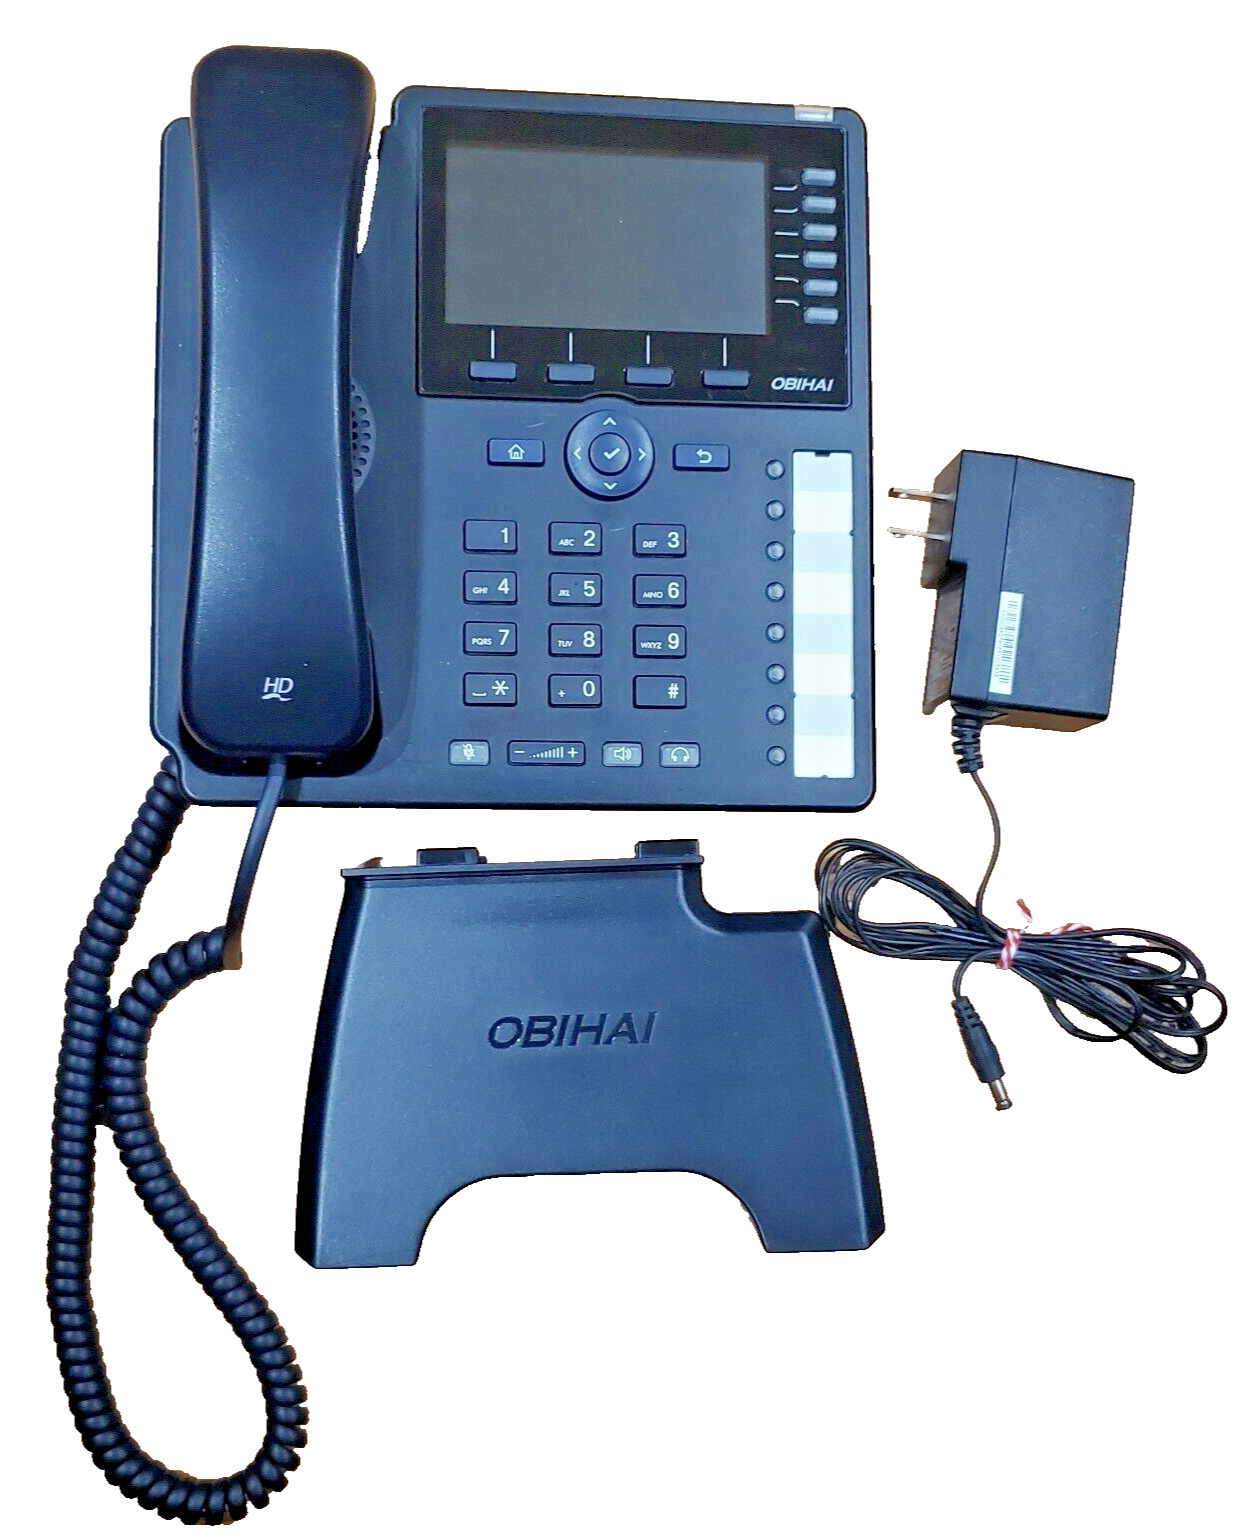 OBIHAI Professional VoIP Phone 24 Lines Color Display WiFi Bluetooth OBi1062